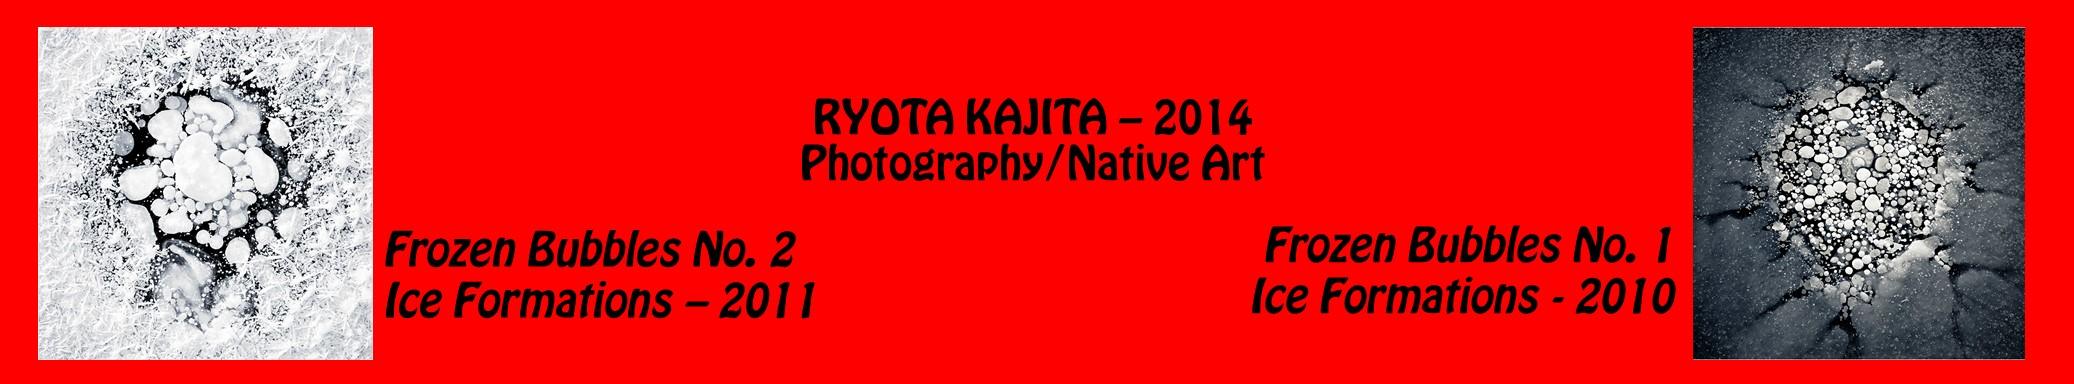 Ryota Kajita - Photography, Native art - Frozen Bubbles No. 2 Ice Formations - 2011 - Frozen Bubbles No. 1 Ice formations - 2010